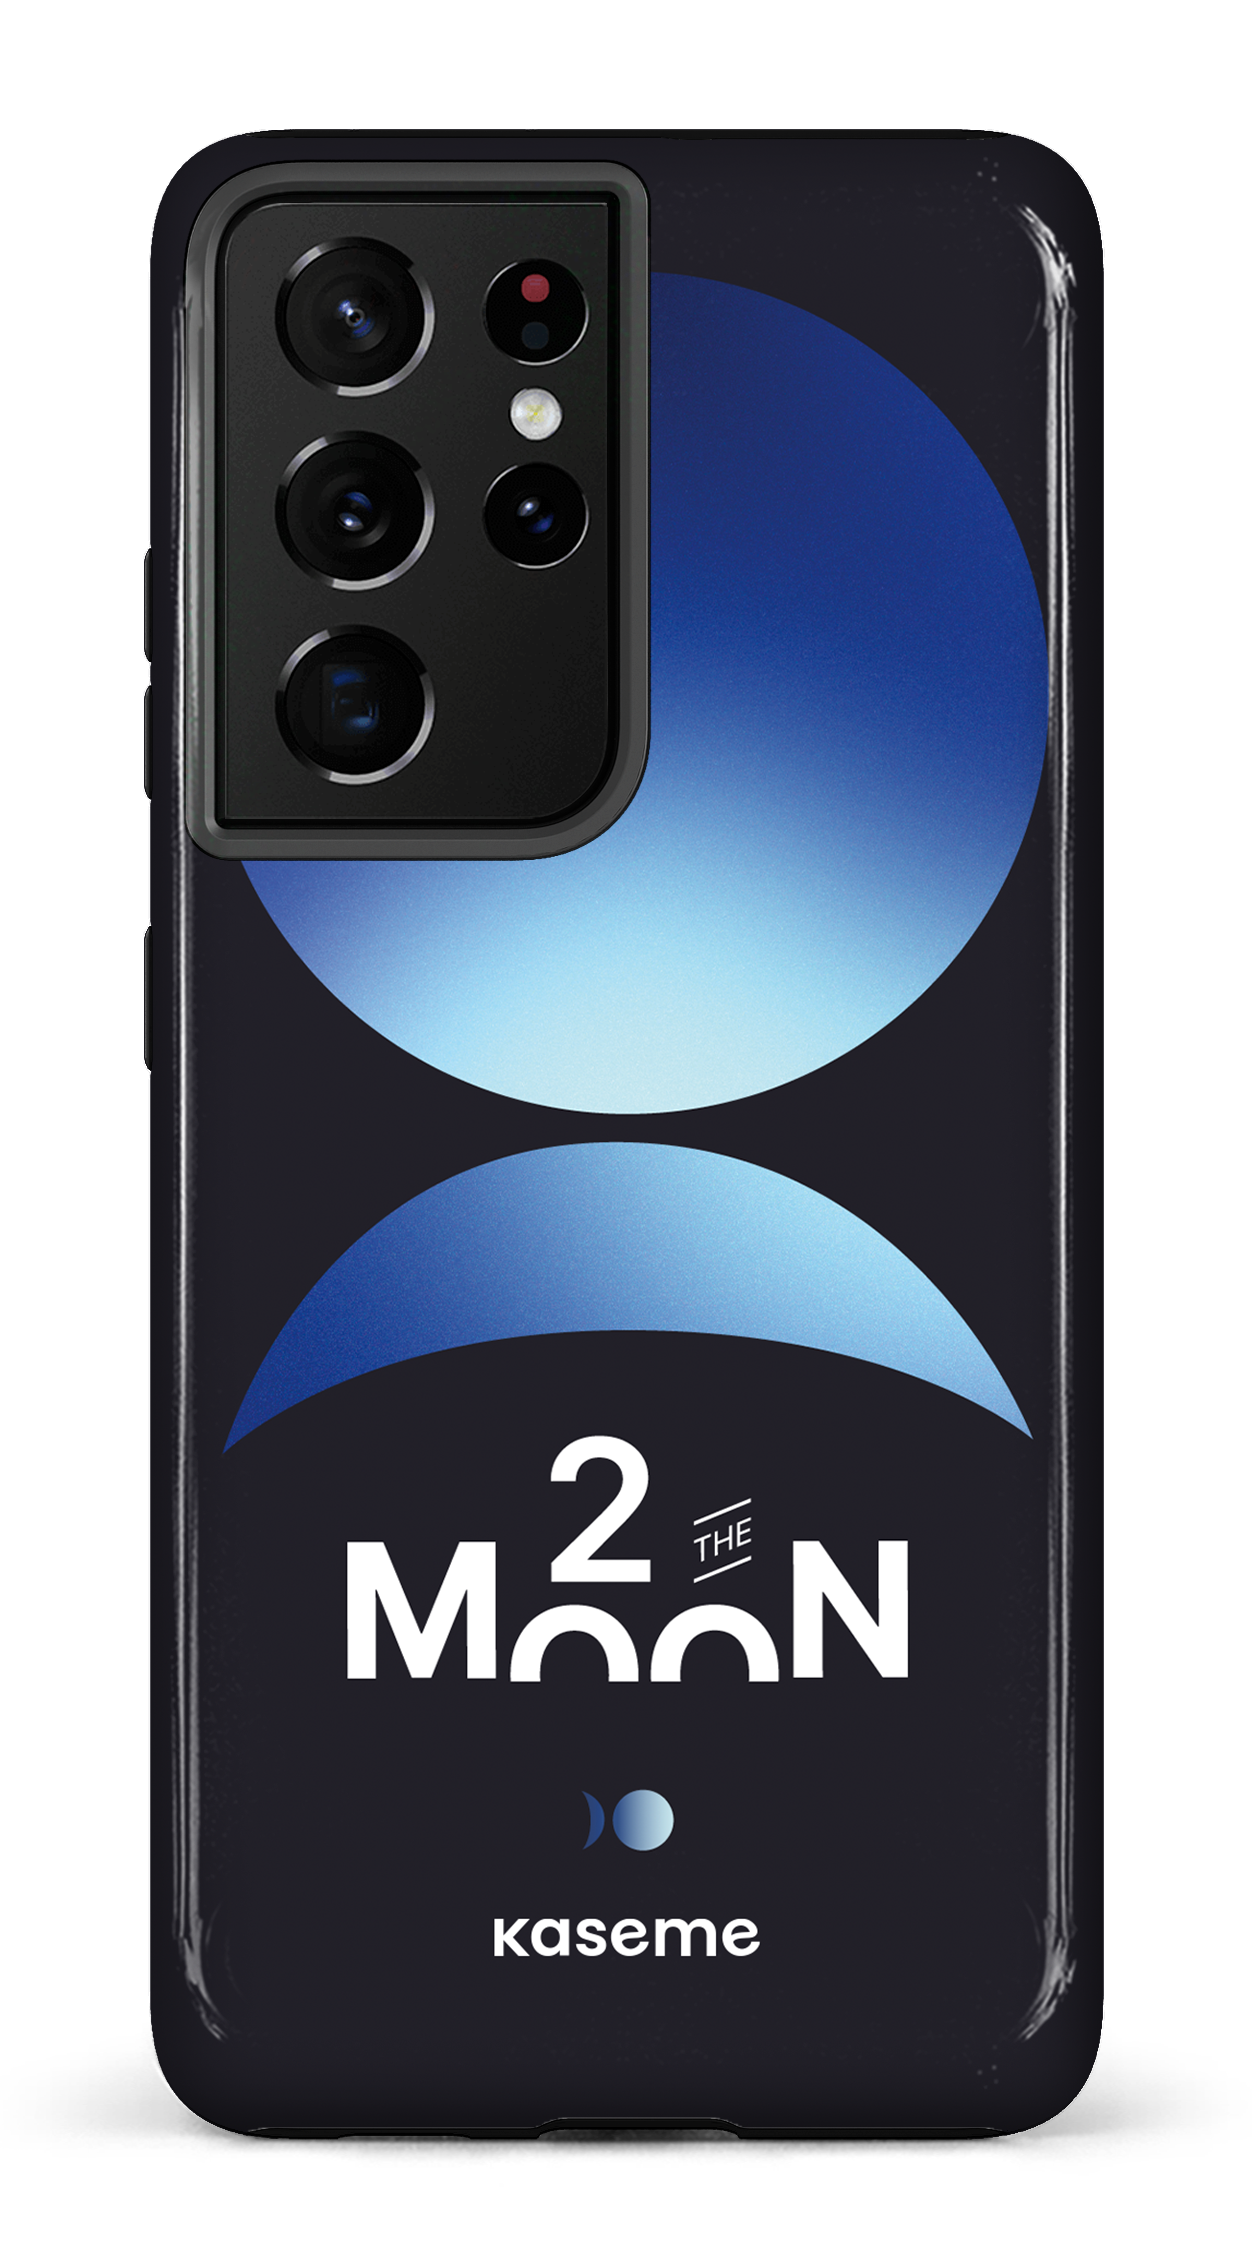 2 The Moon - Galaxy S21 Ultra